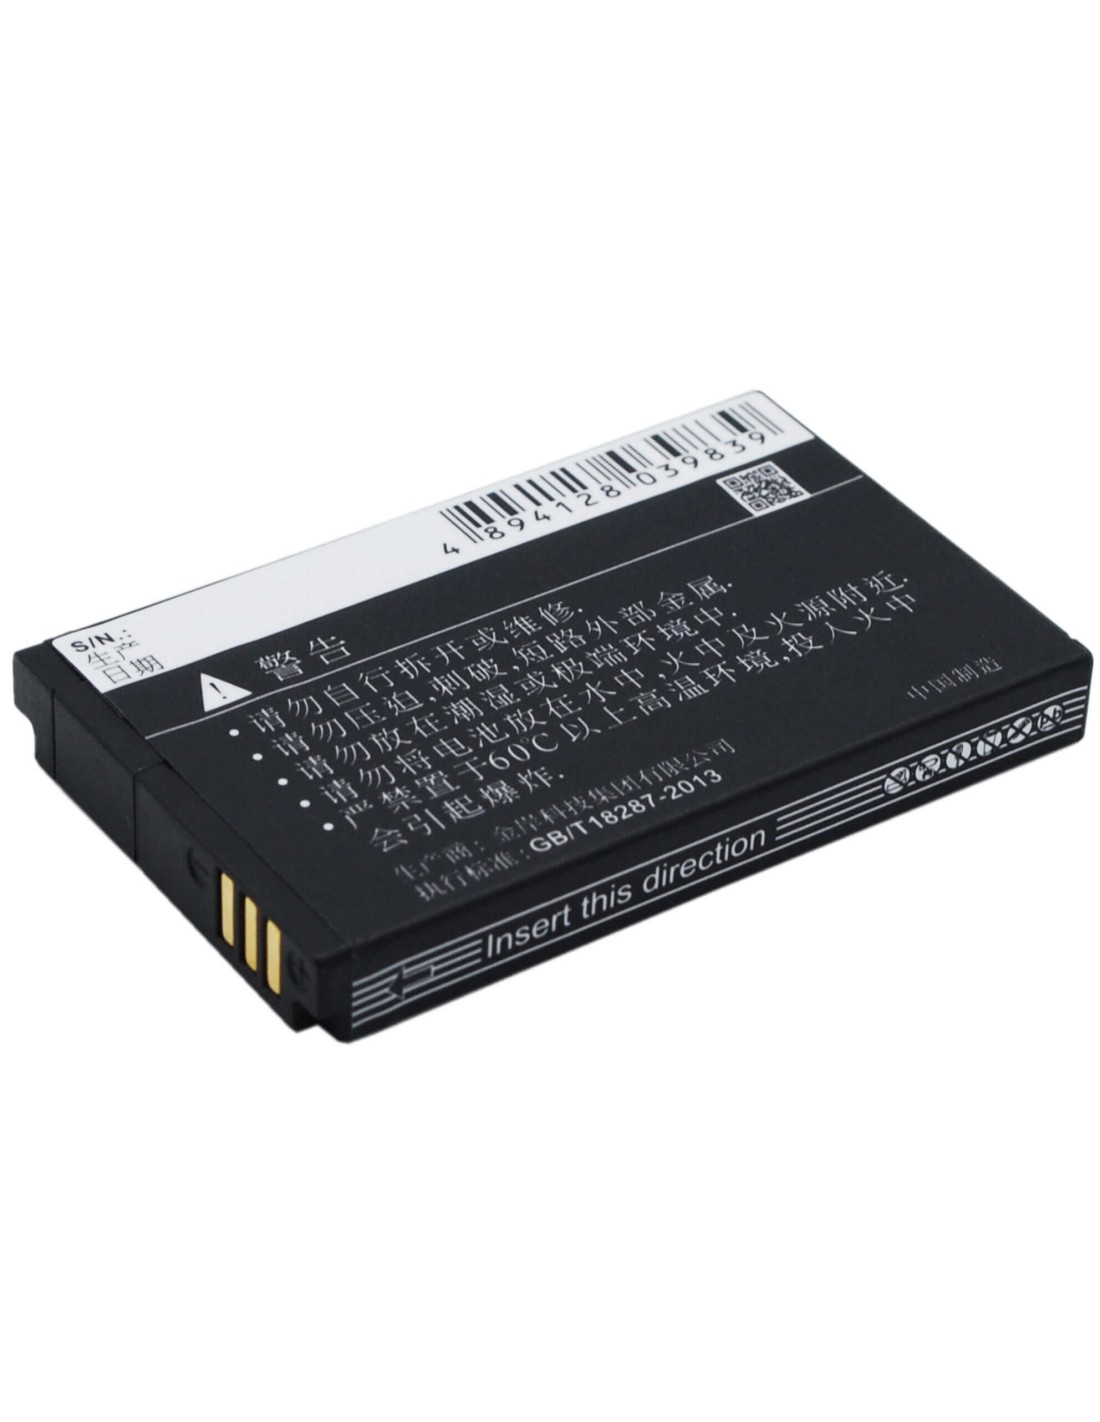 Battery for Huawei C2600, C2606, C2800 3.7V, 1100mAh - 4.07Wh